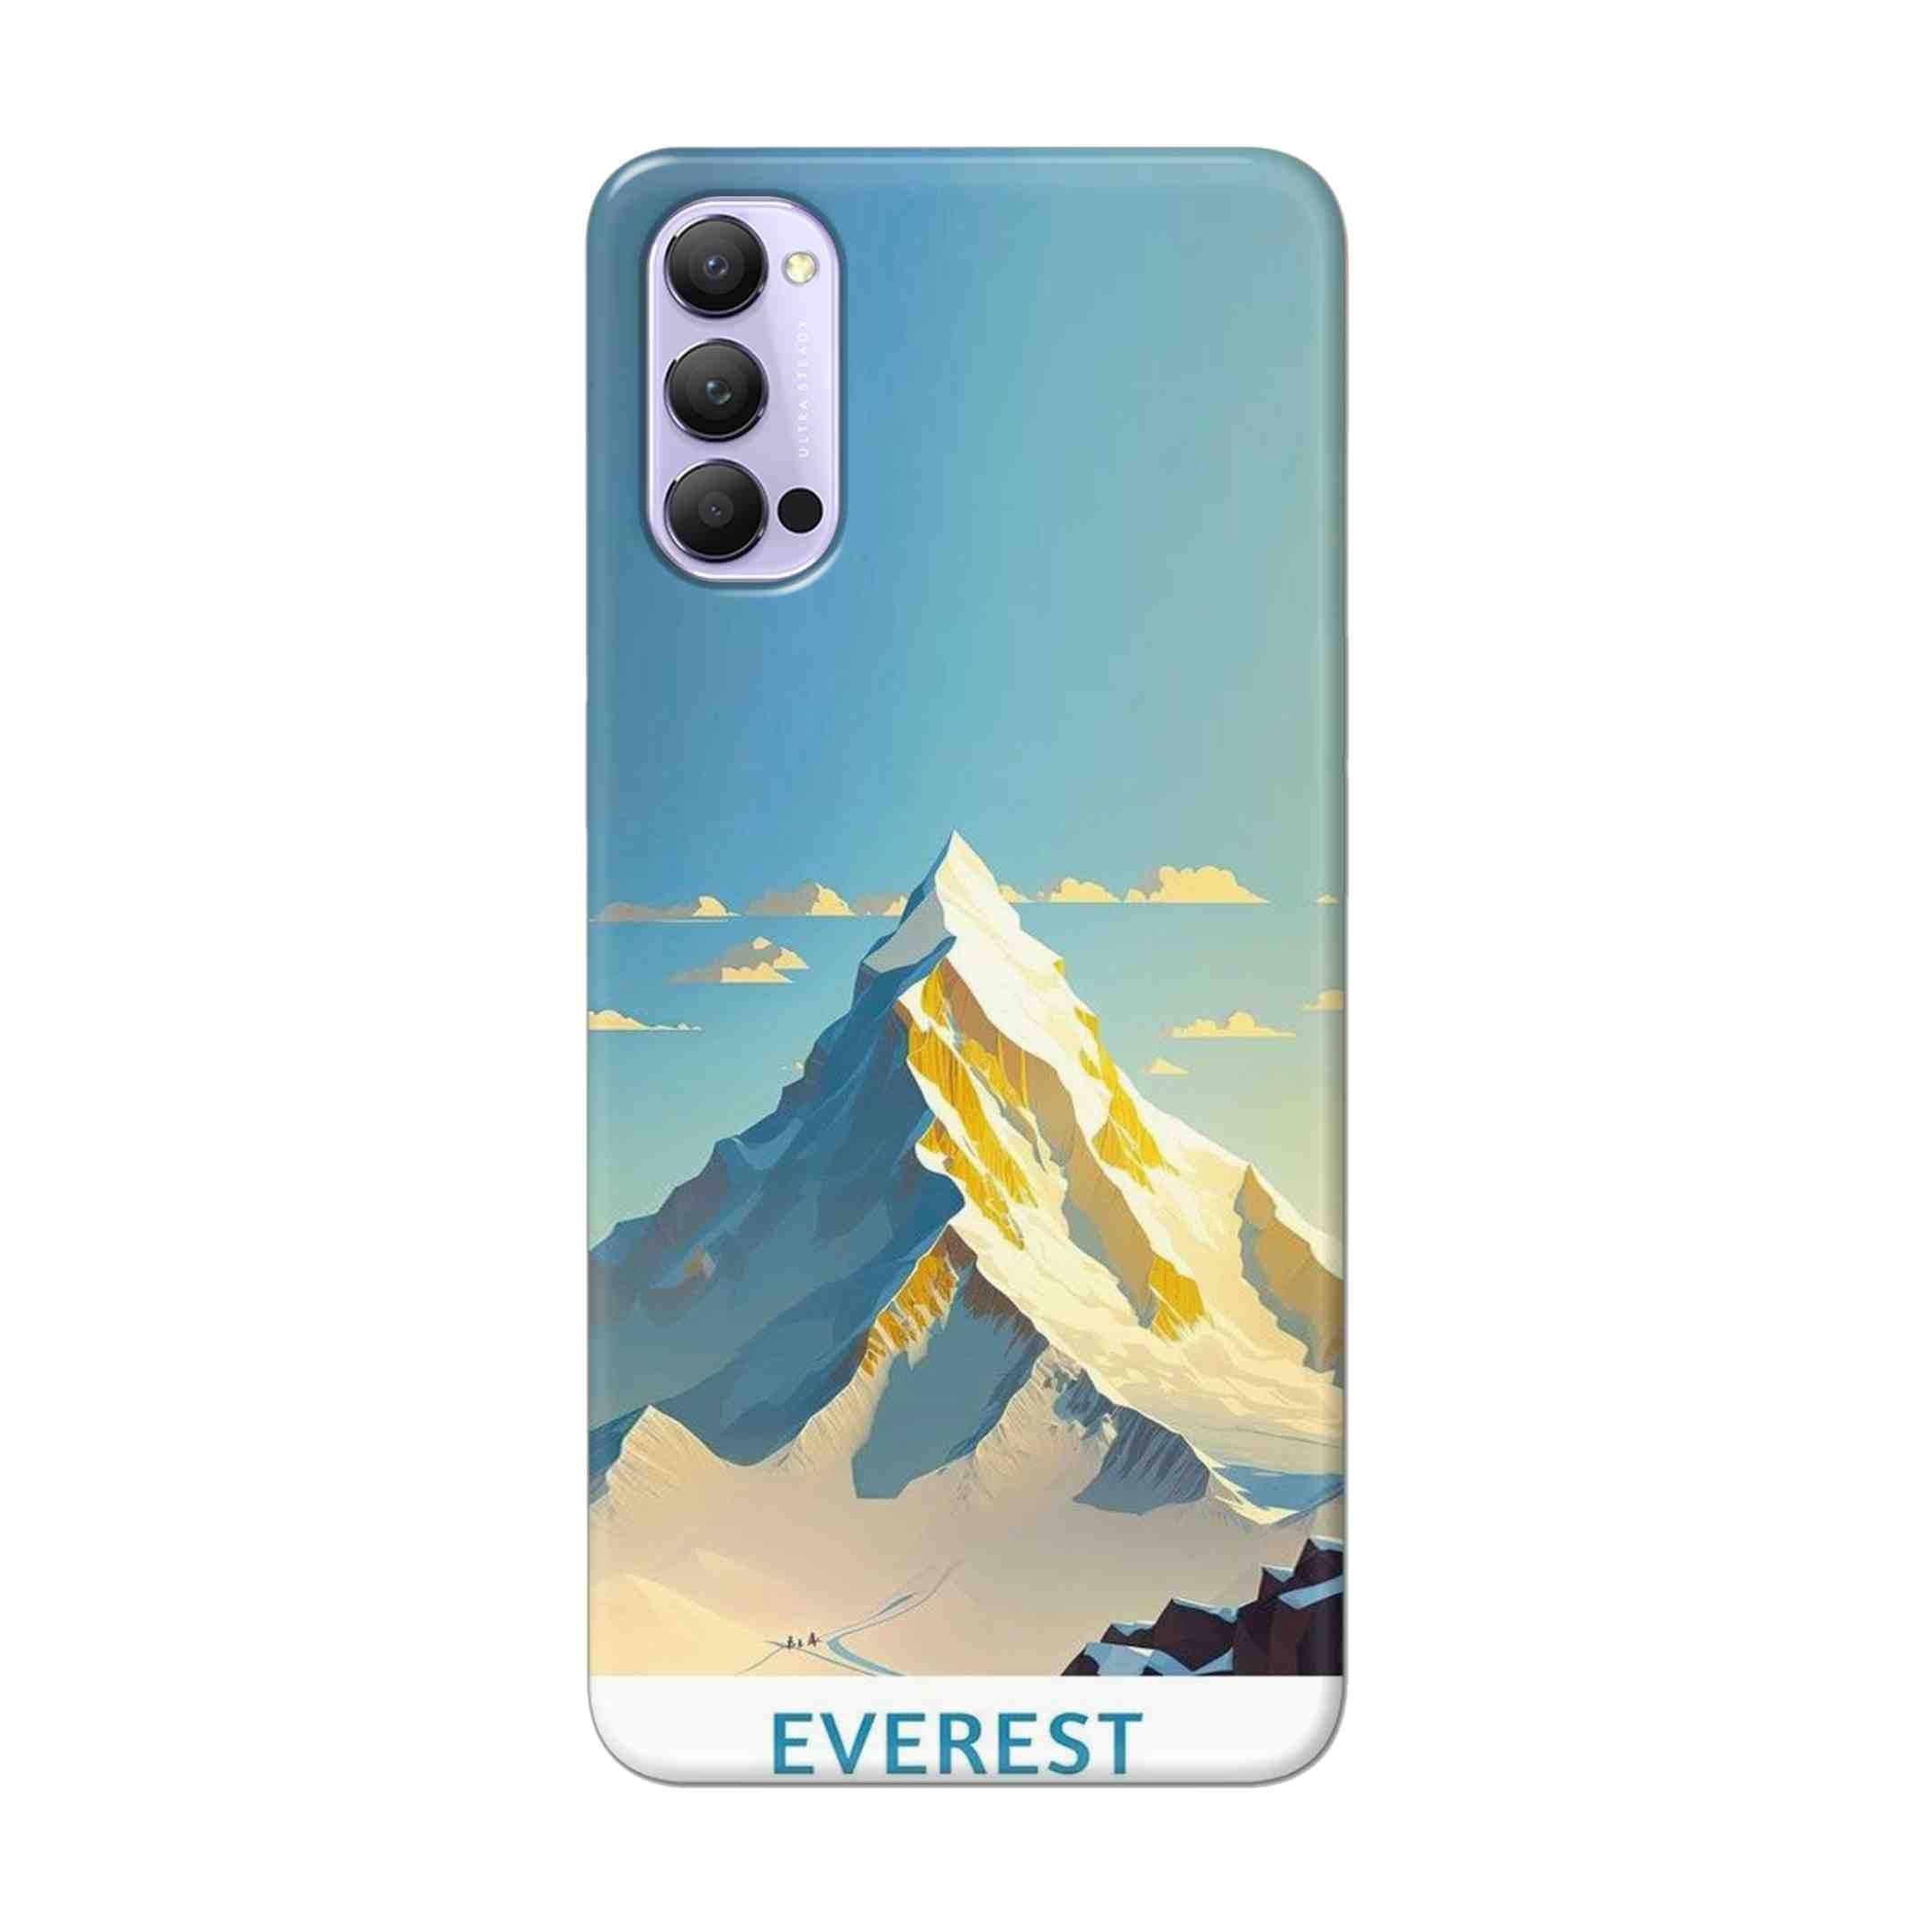 Buy Everest Hard Back Mobile Phone Case Cover For Oppo Reno 4 Pro Online